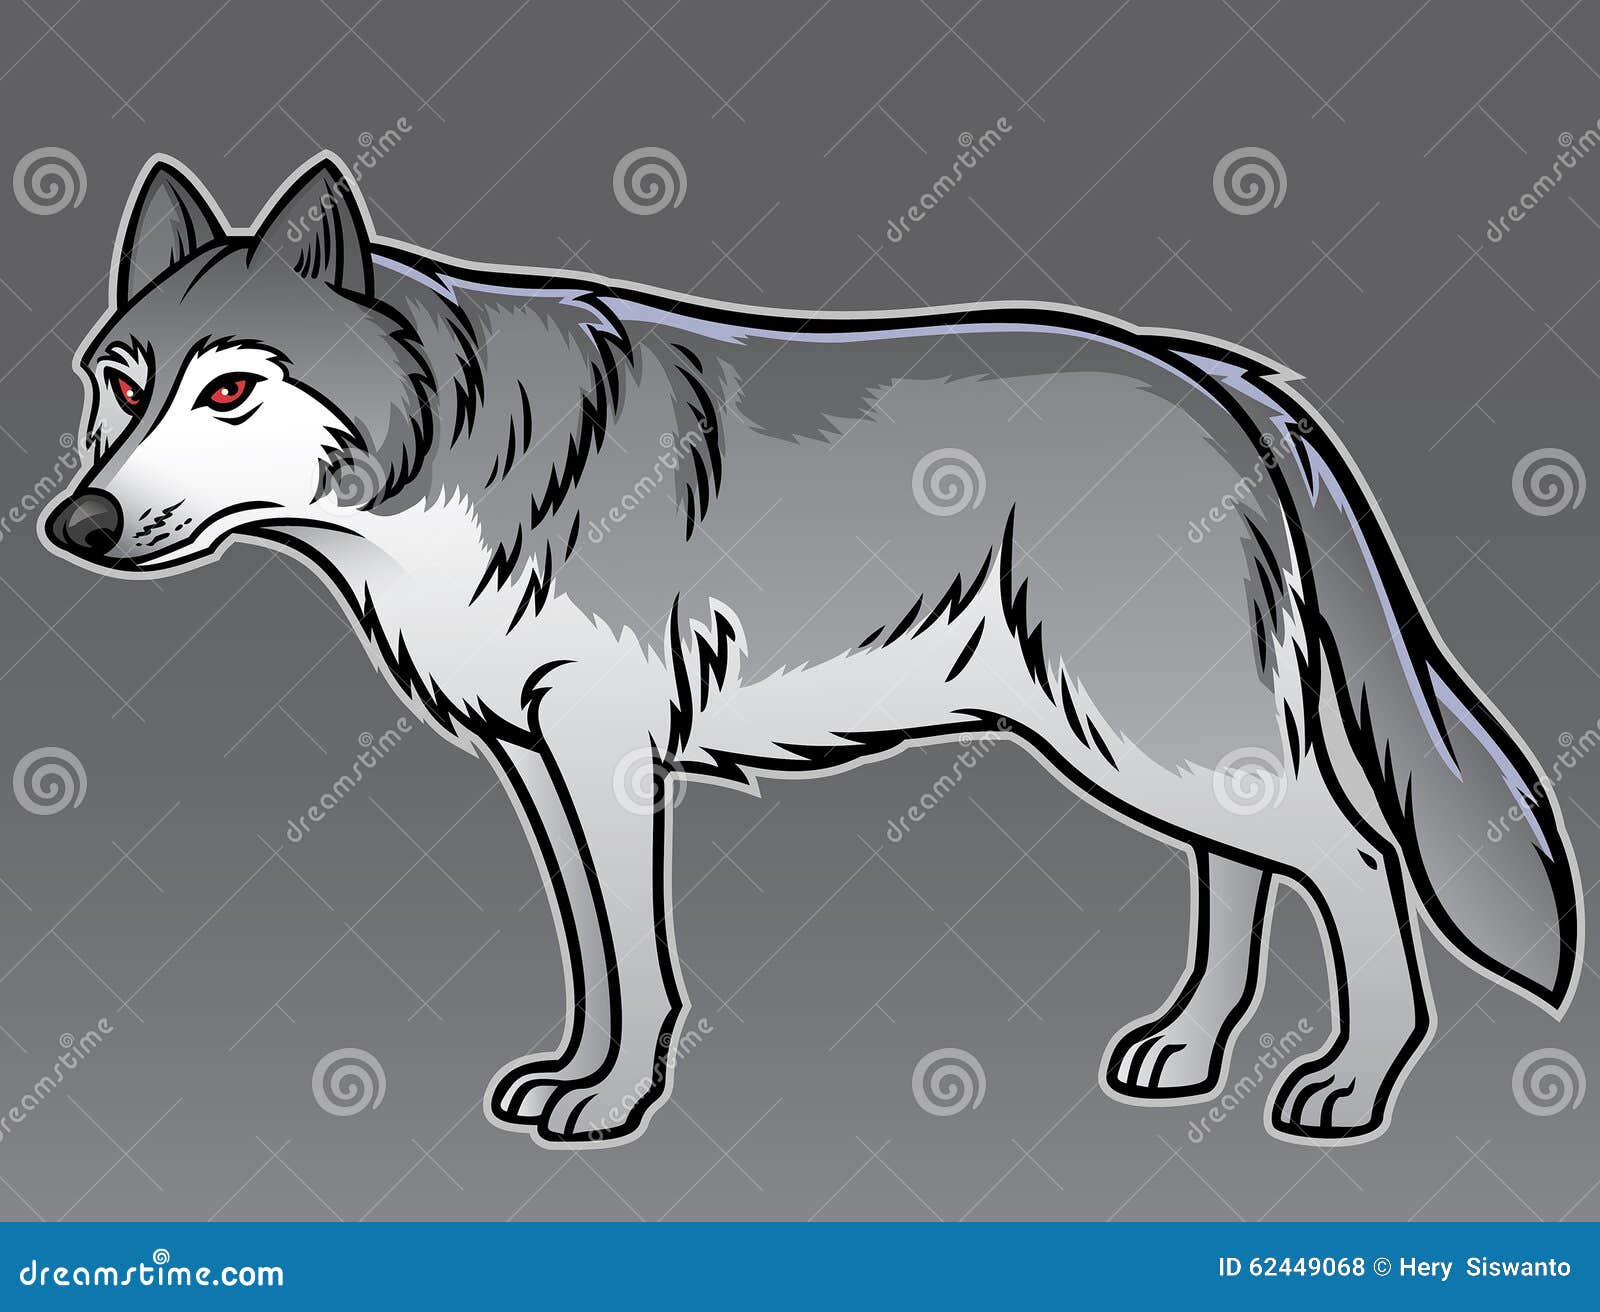 Wolf Bite The Piston Vector Illustration | CartoonDealer.com #56922896